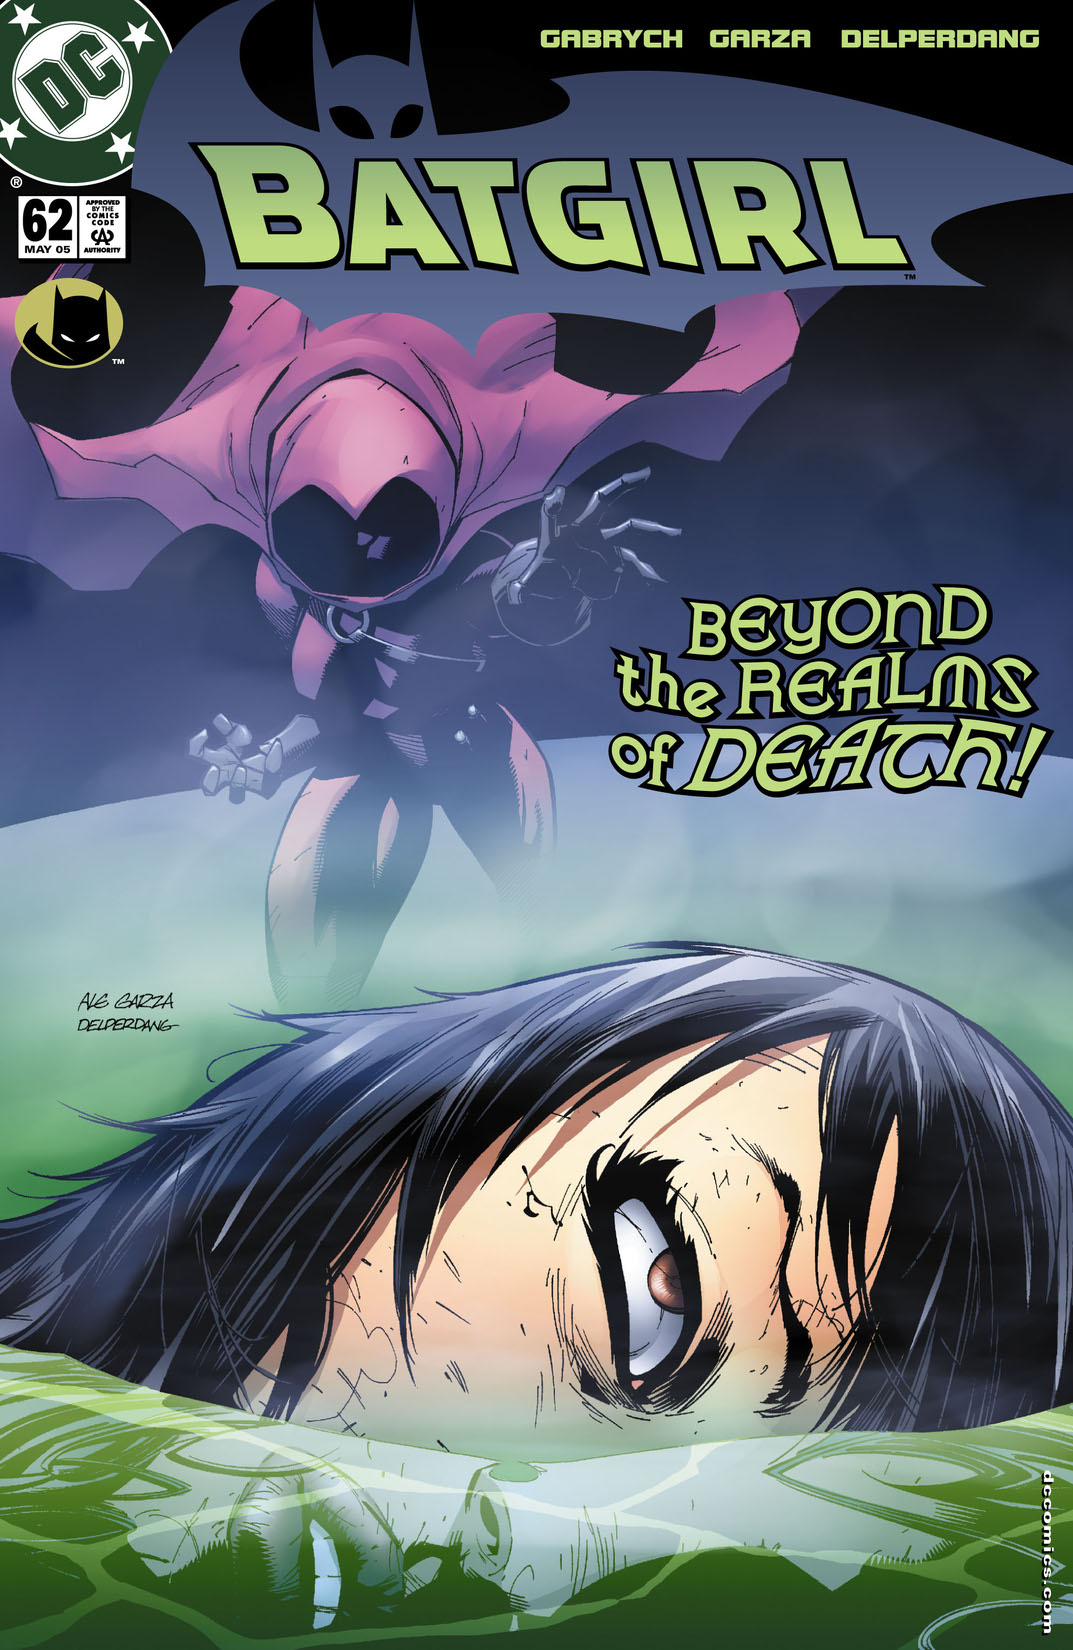 Batgirl (2000-) #62 preview images